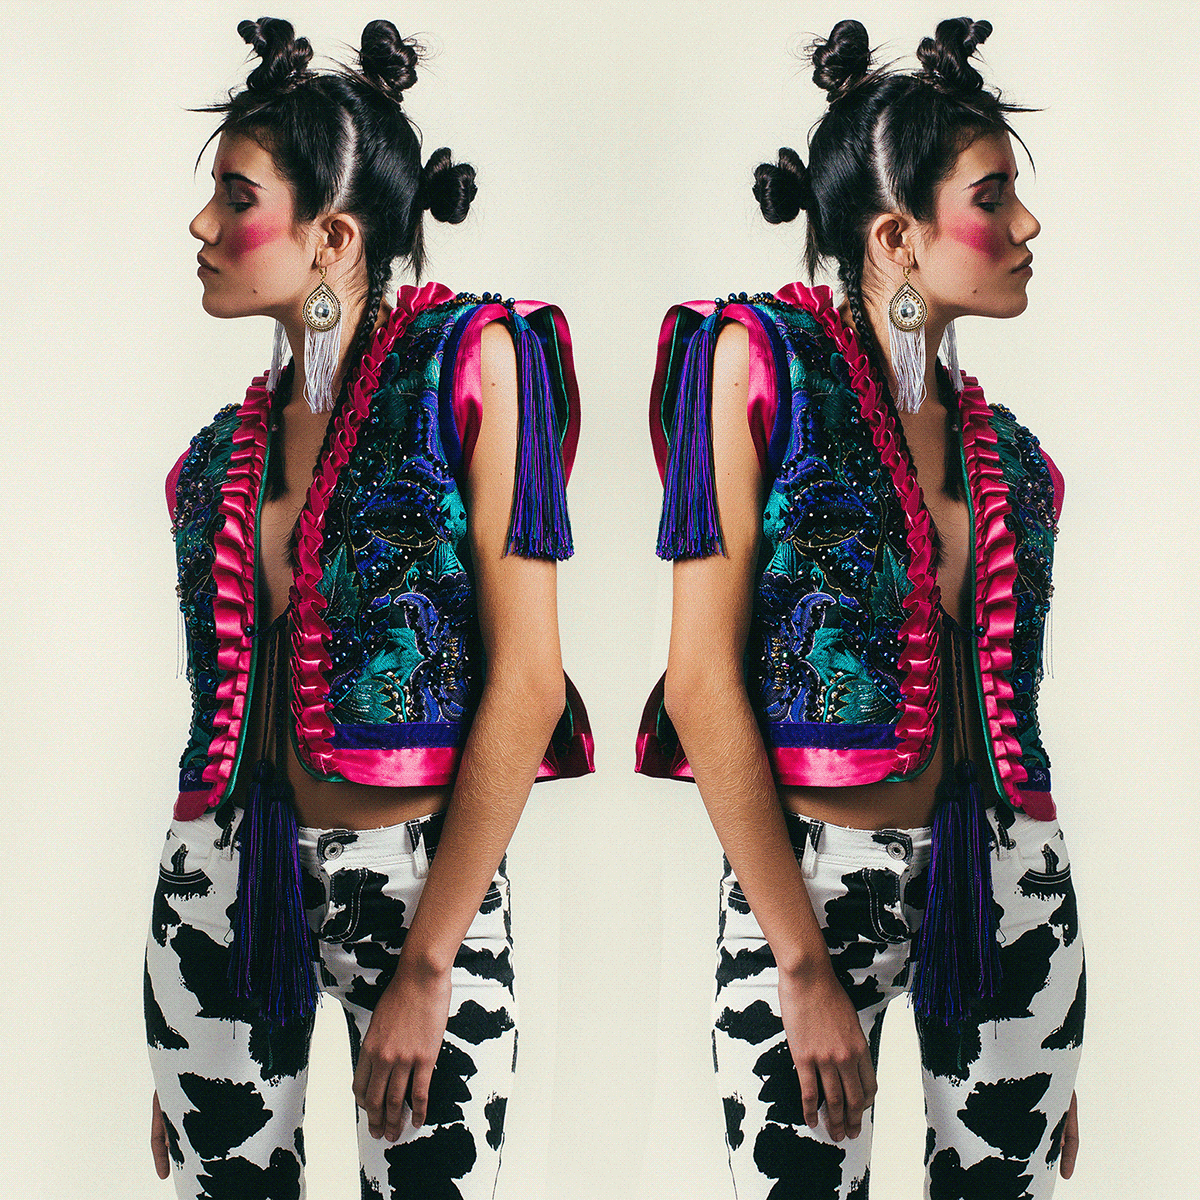 moda mexico Fotografia colors colores retouch asian Mexican culture makeup art revolution meowmagazine Guadalajara